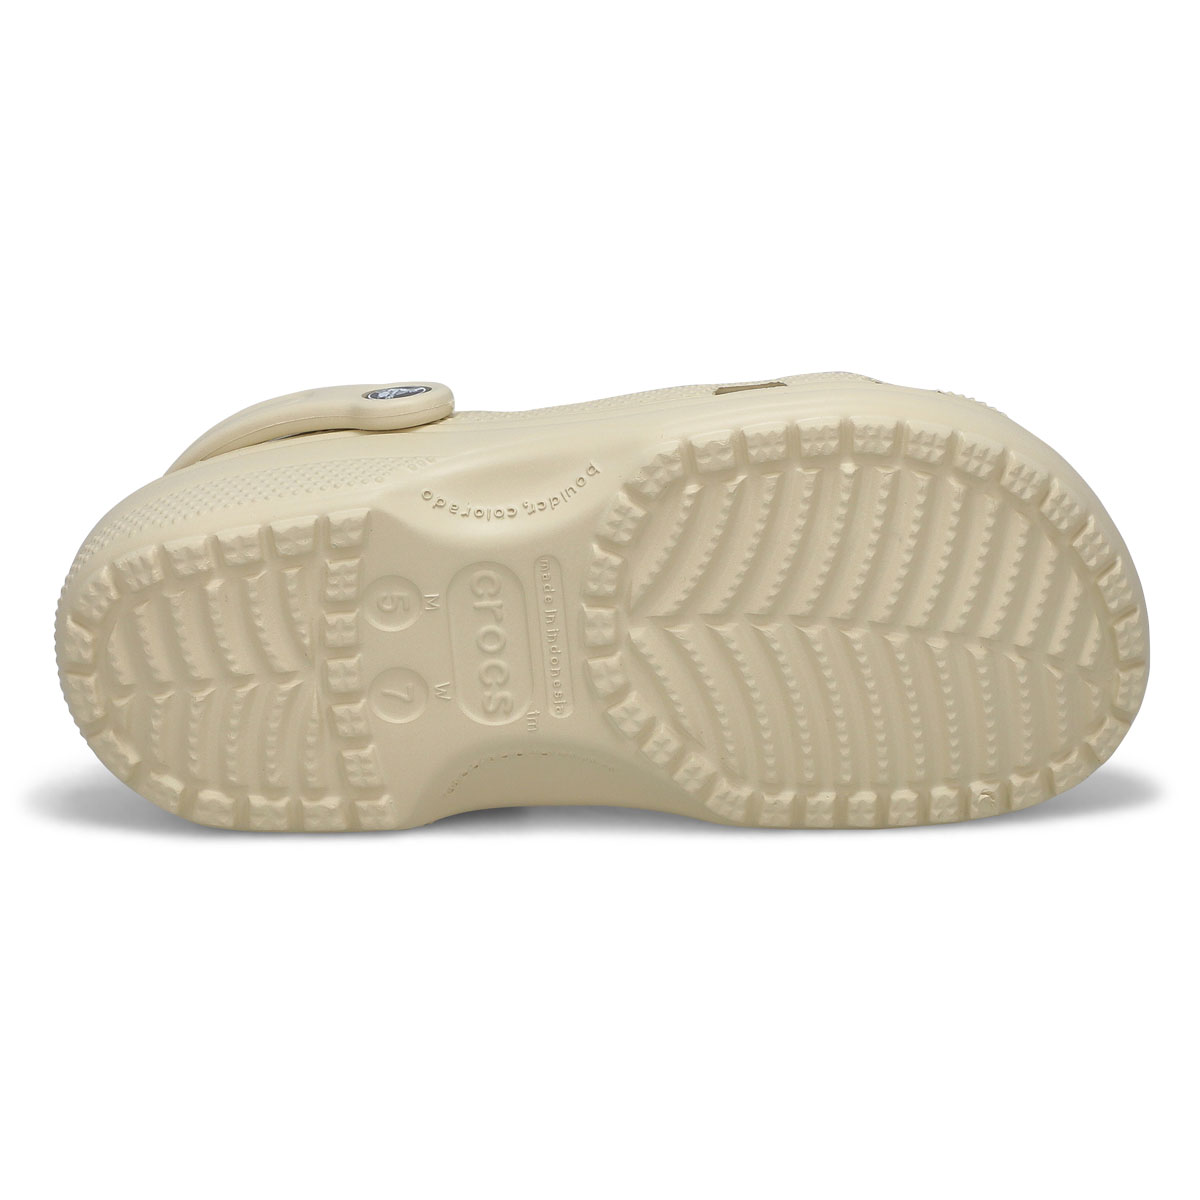 Crocs Women's Classic EVA Comfort Clog - Bone | SoftMoc USA